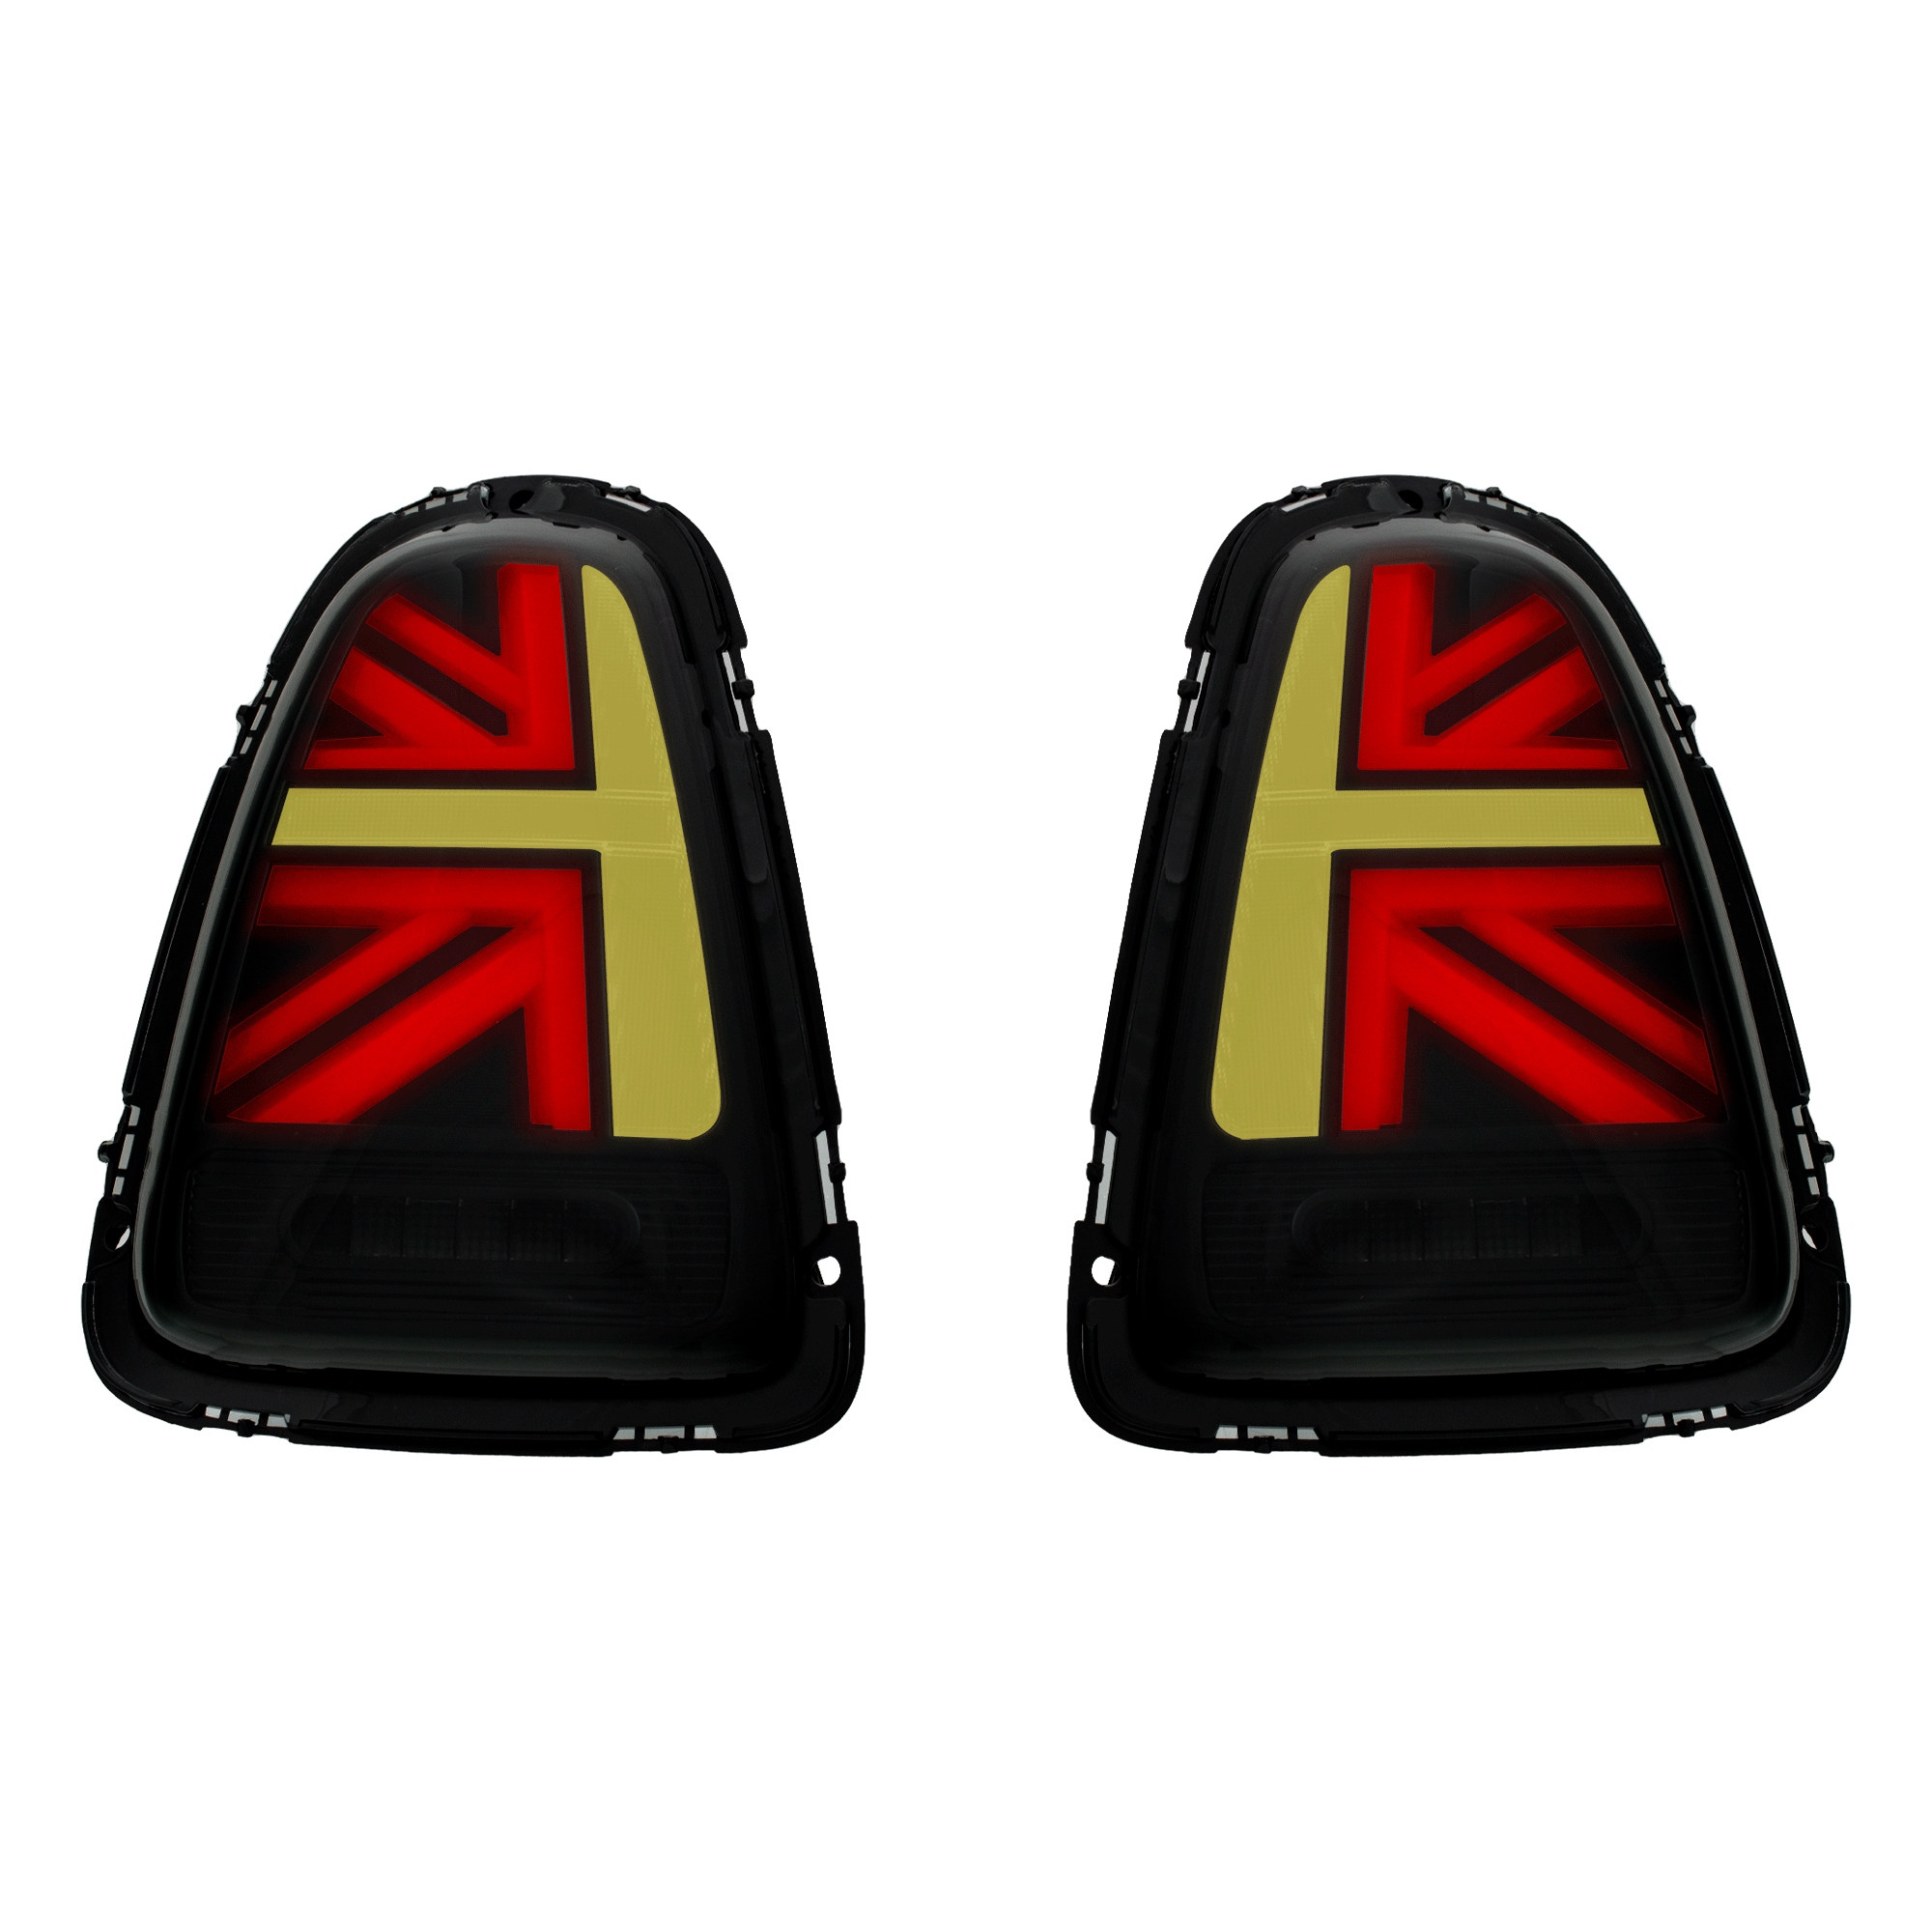 Lightbar LED Rückleuchten für Mini R55 56 57 58 59 Bj.06-13 smoke Union Jack